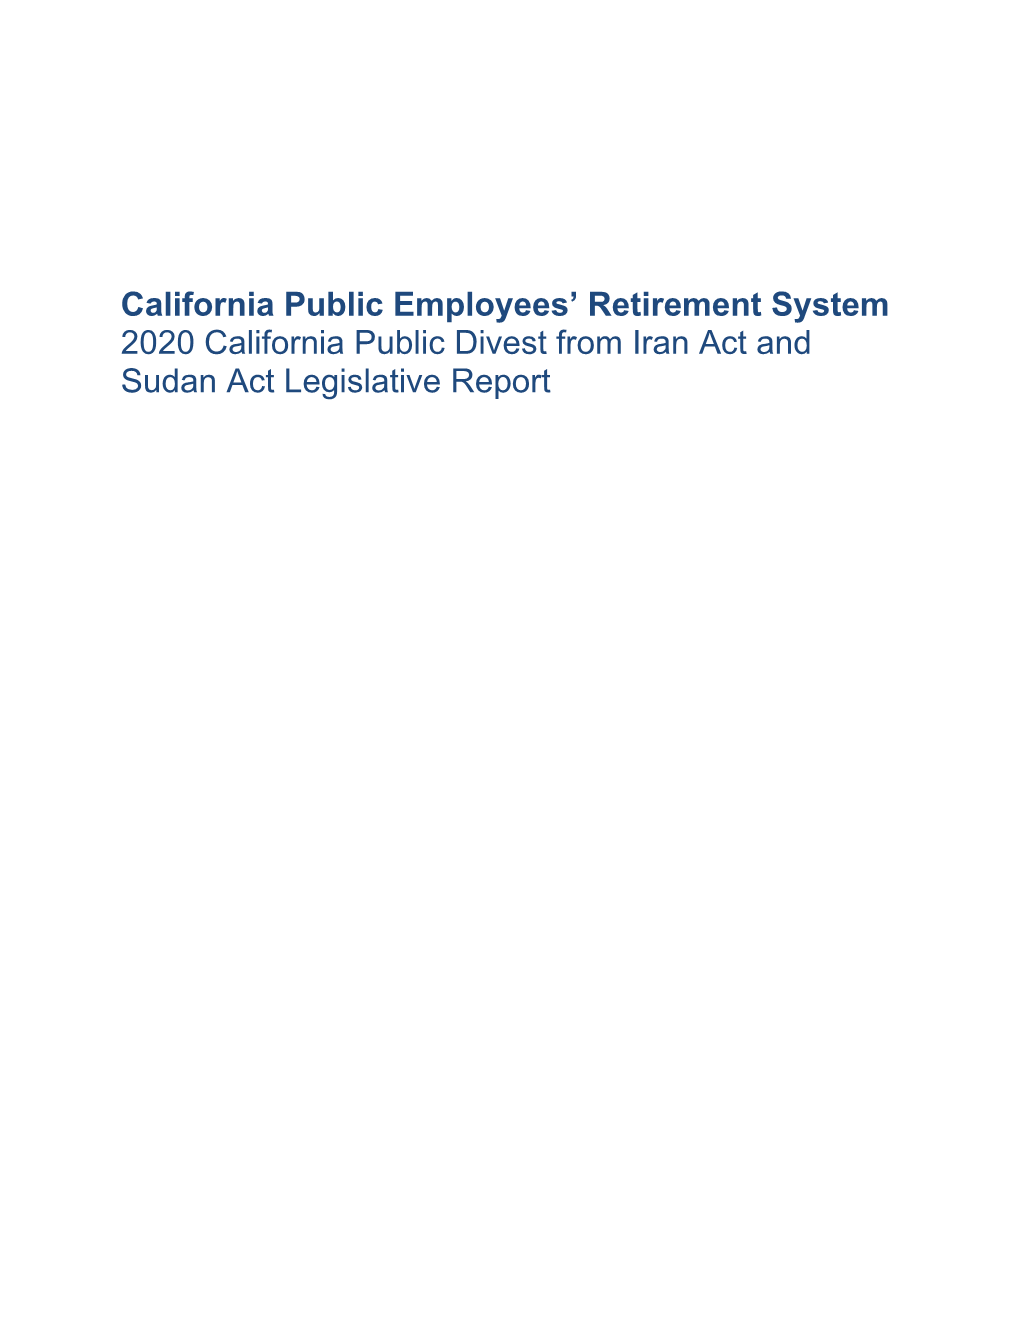 2020 California Public Divest from Iran Act and Sudan Act Legislative Report